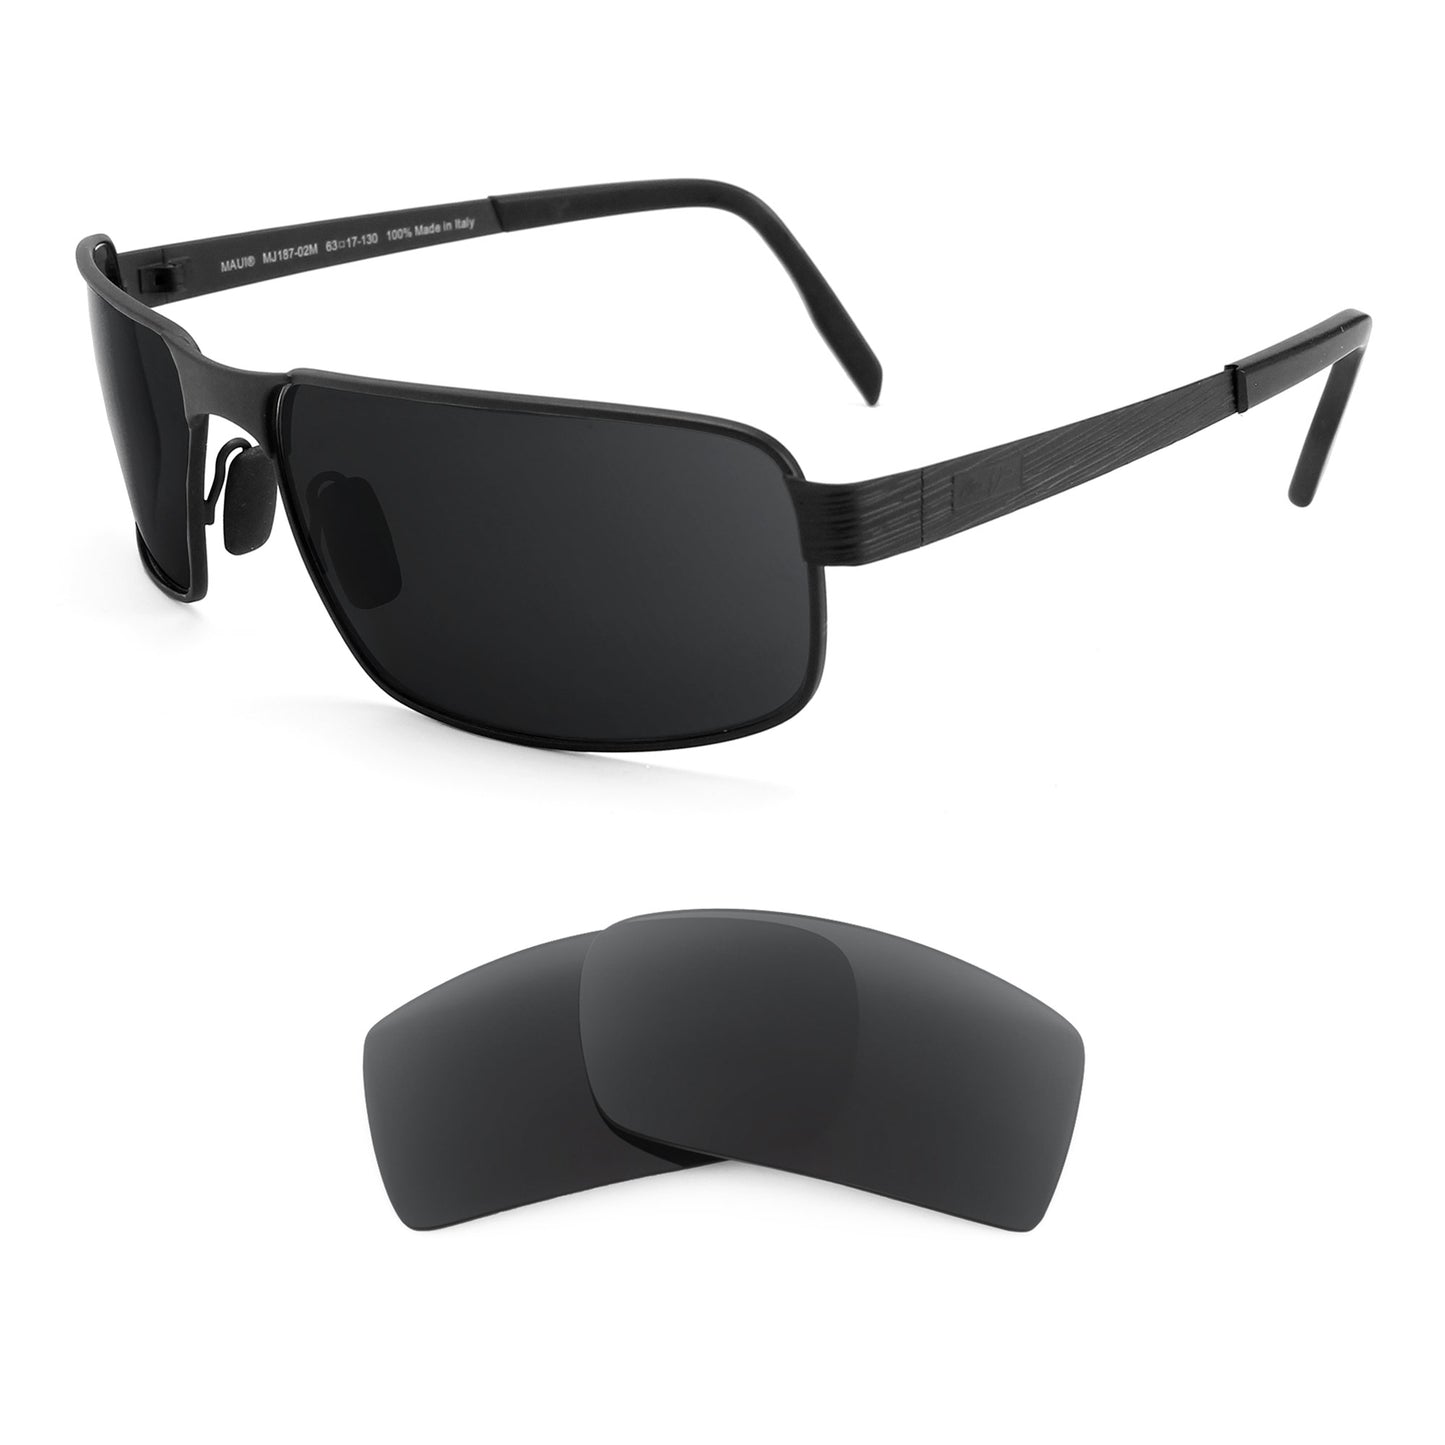 Maui Jim Castaway MJ187 sunglasses with replacement lenses